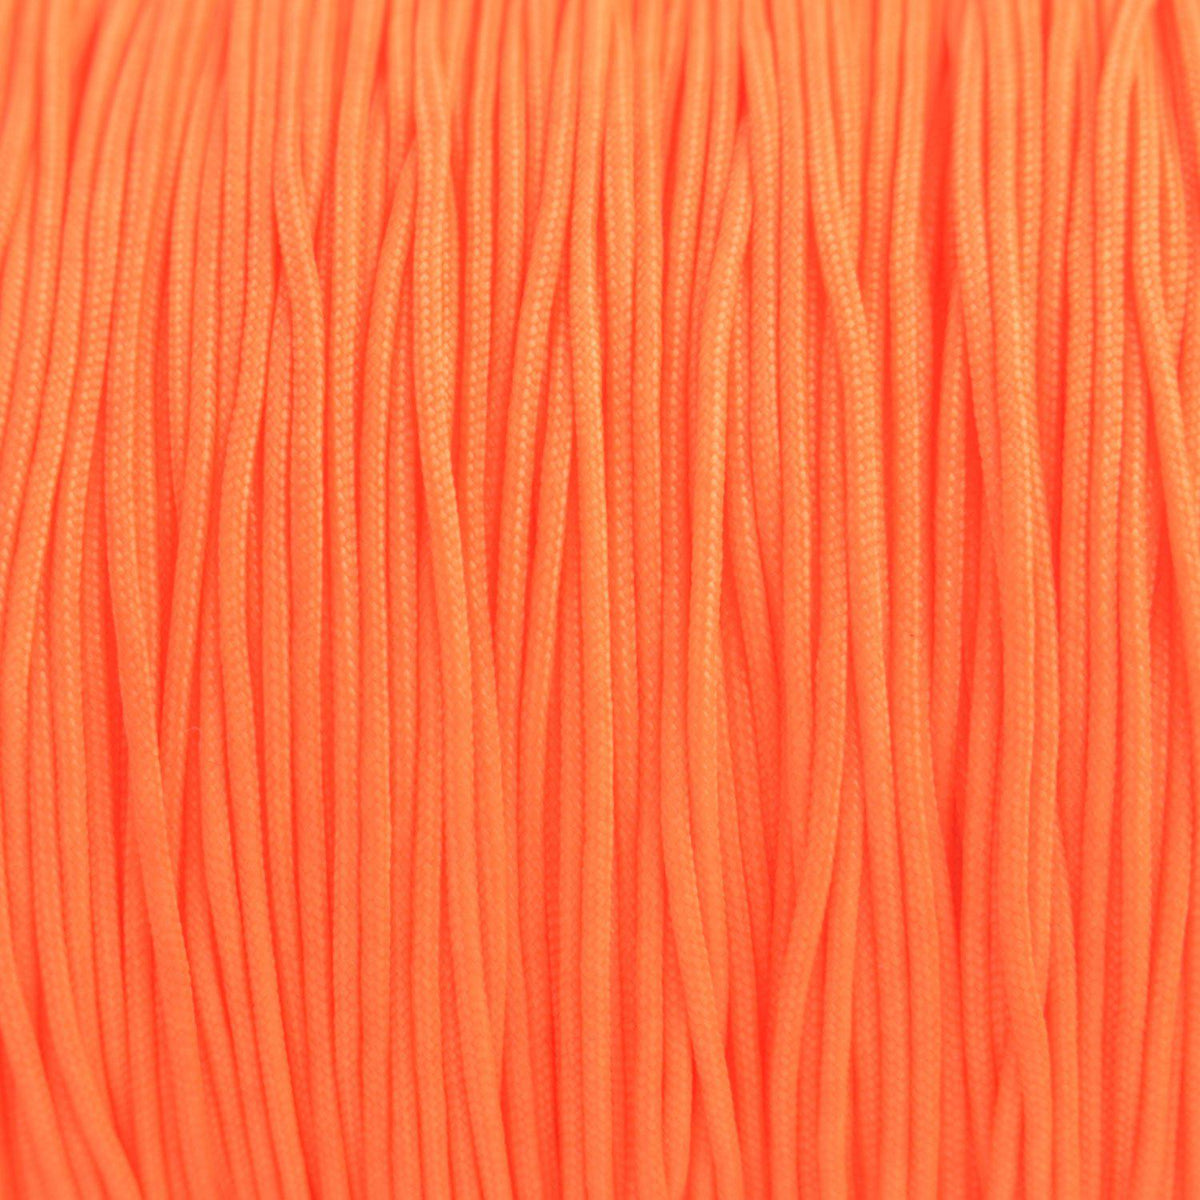 Nylon rattail koord fluor oranje 0.8mm - 6 meter-Kraaltjes van Renate